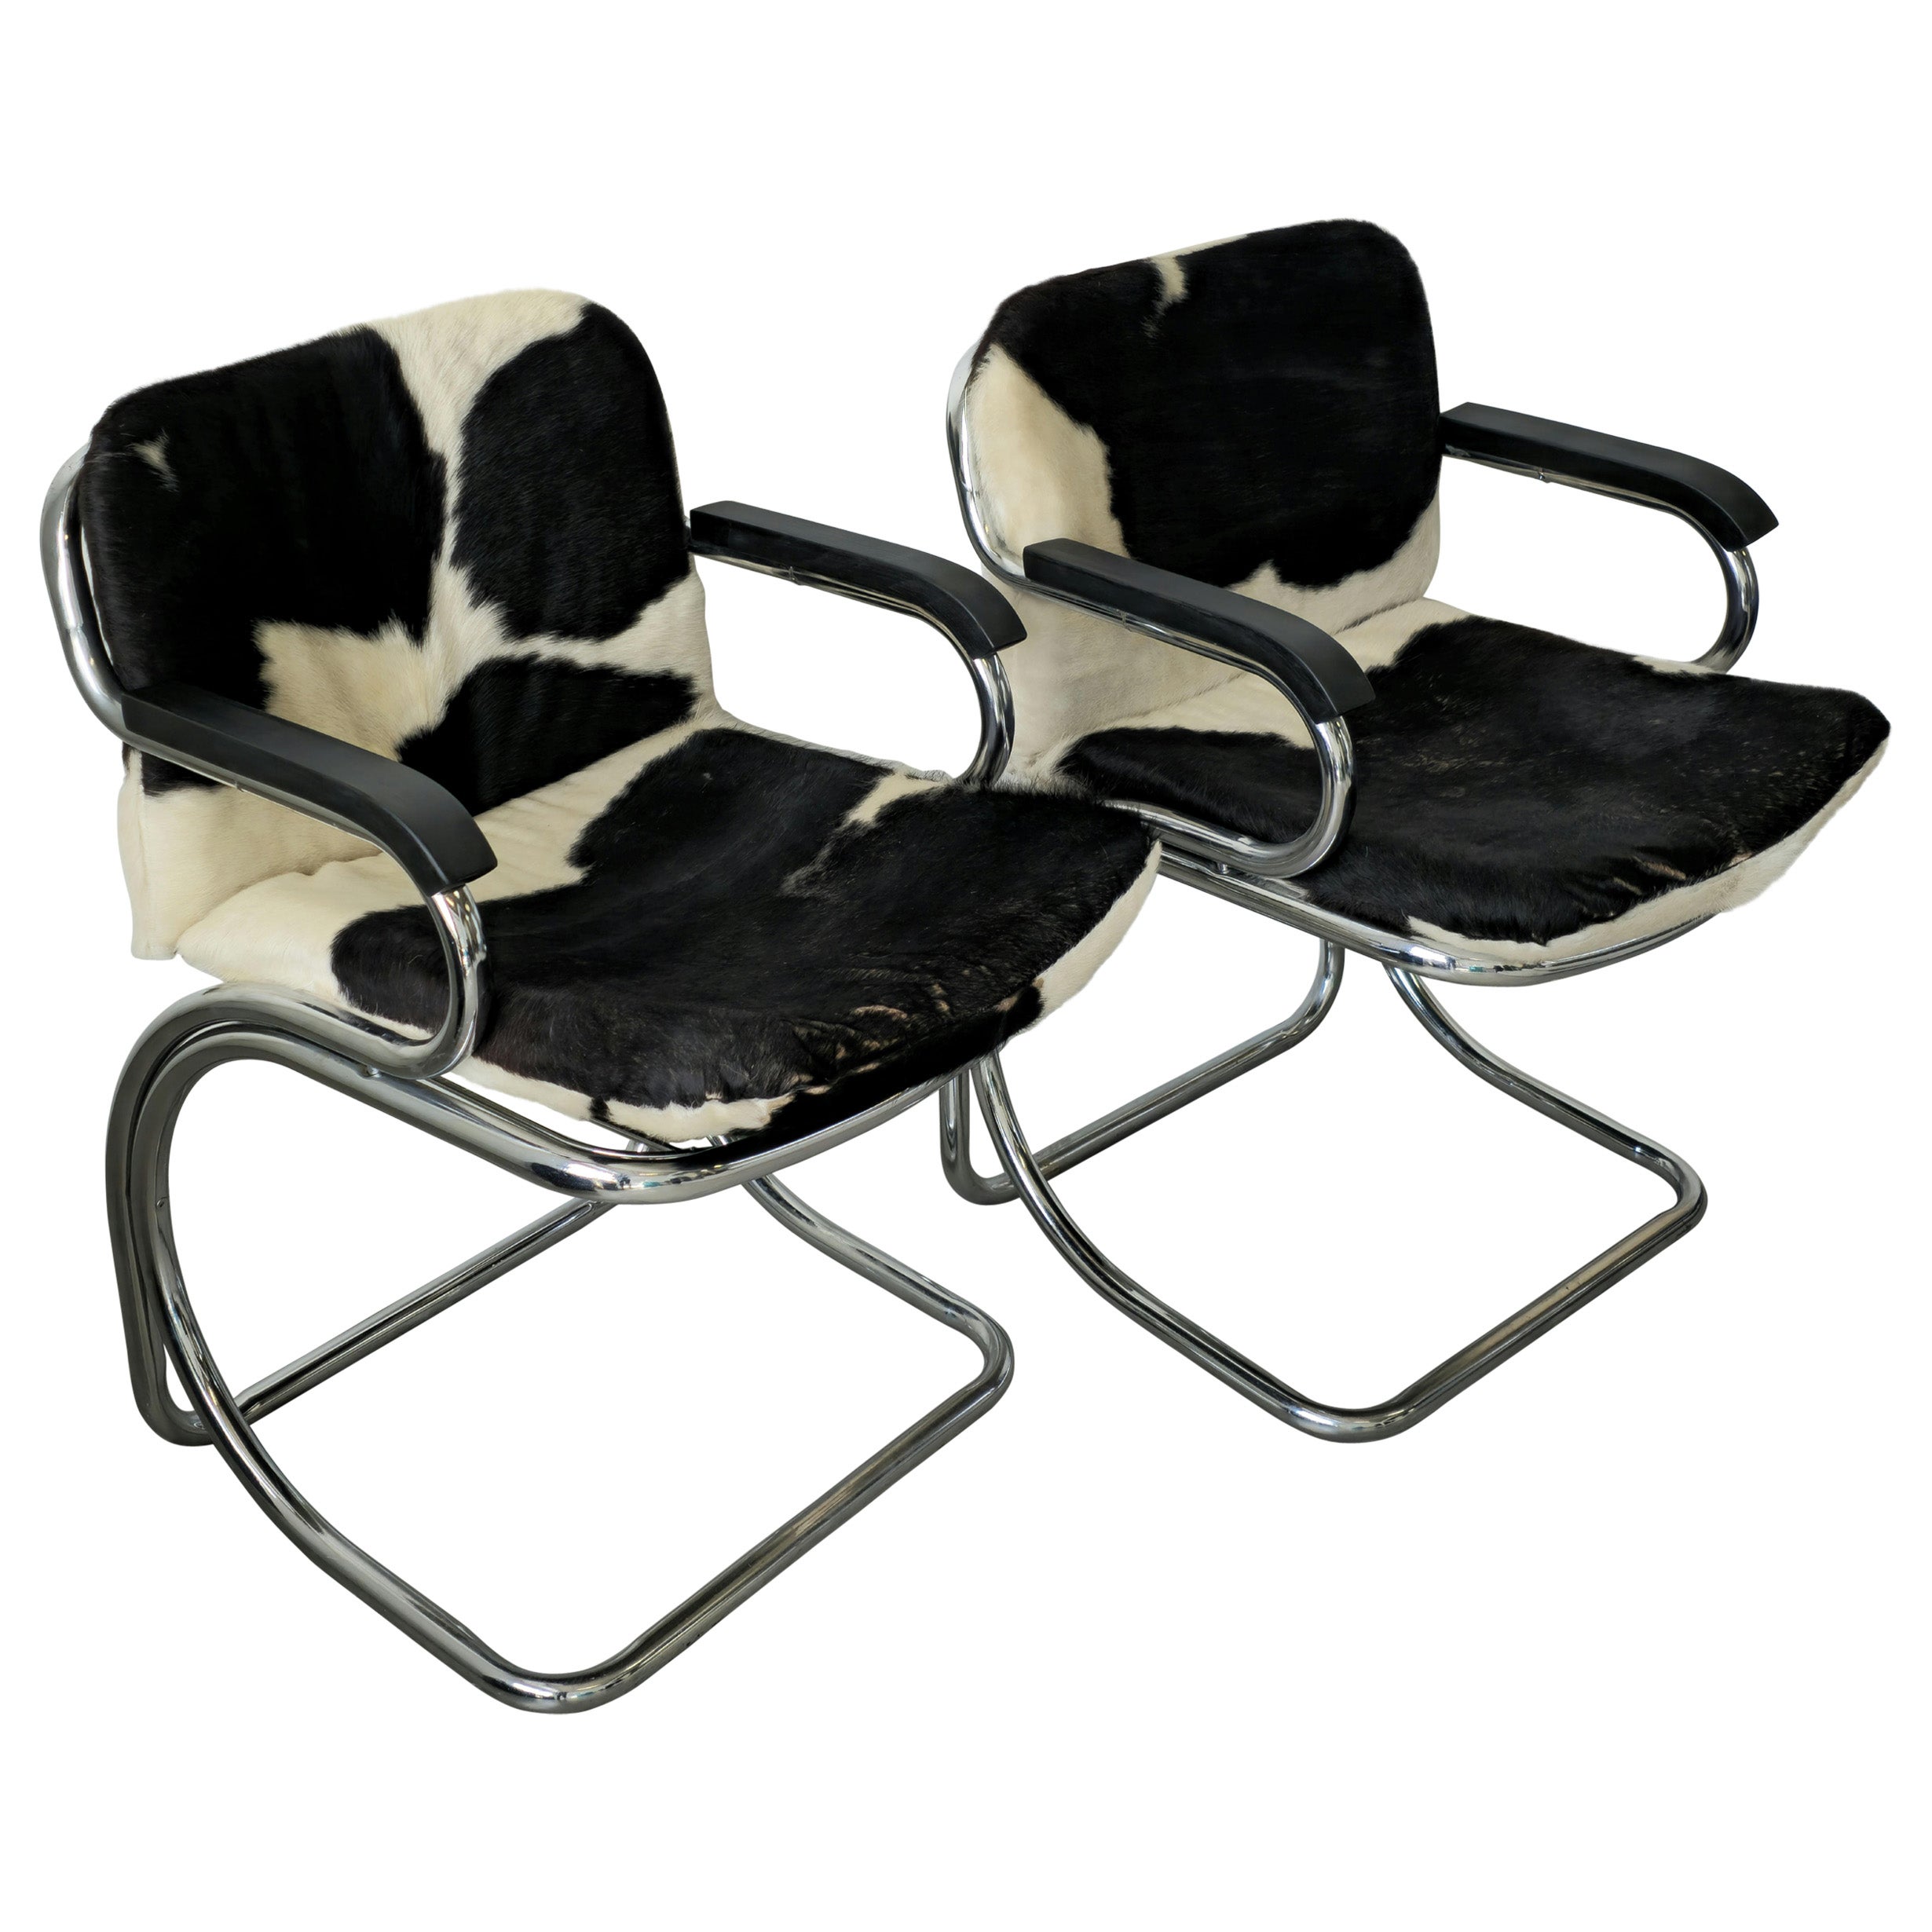 1970s Gastone Rinaldi Chrome Chairs 